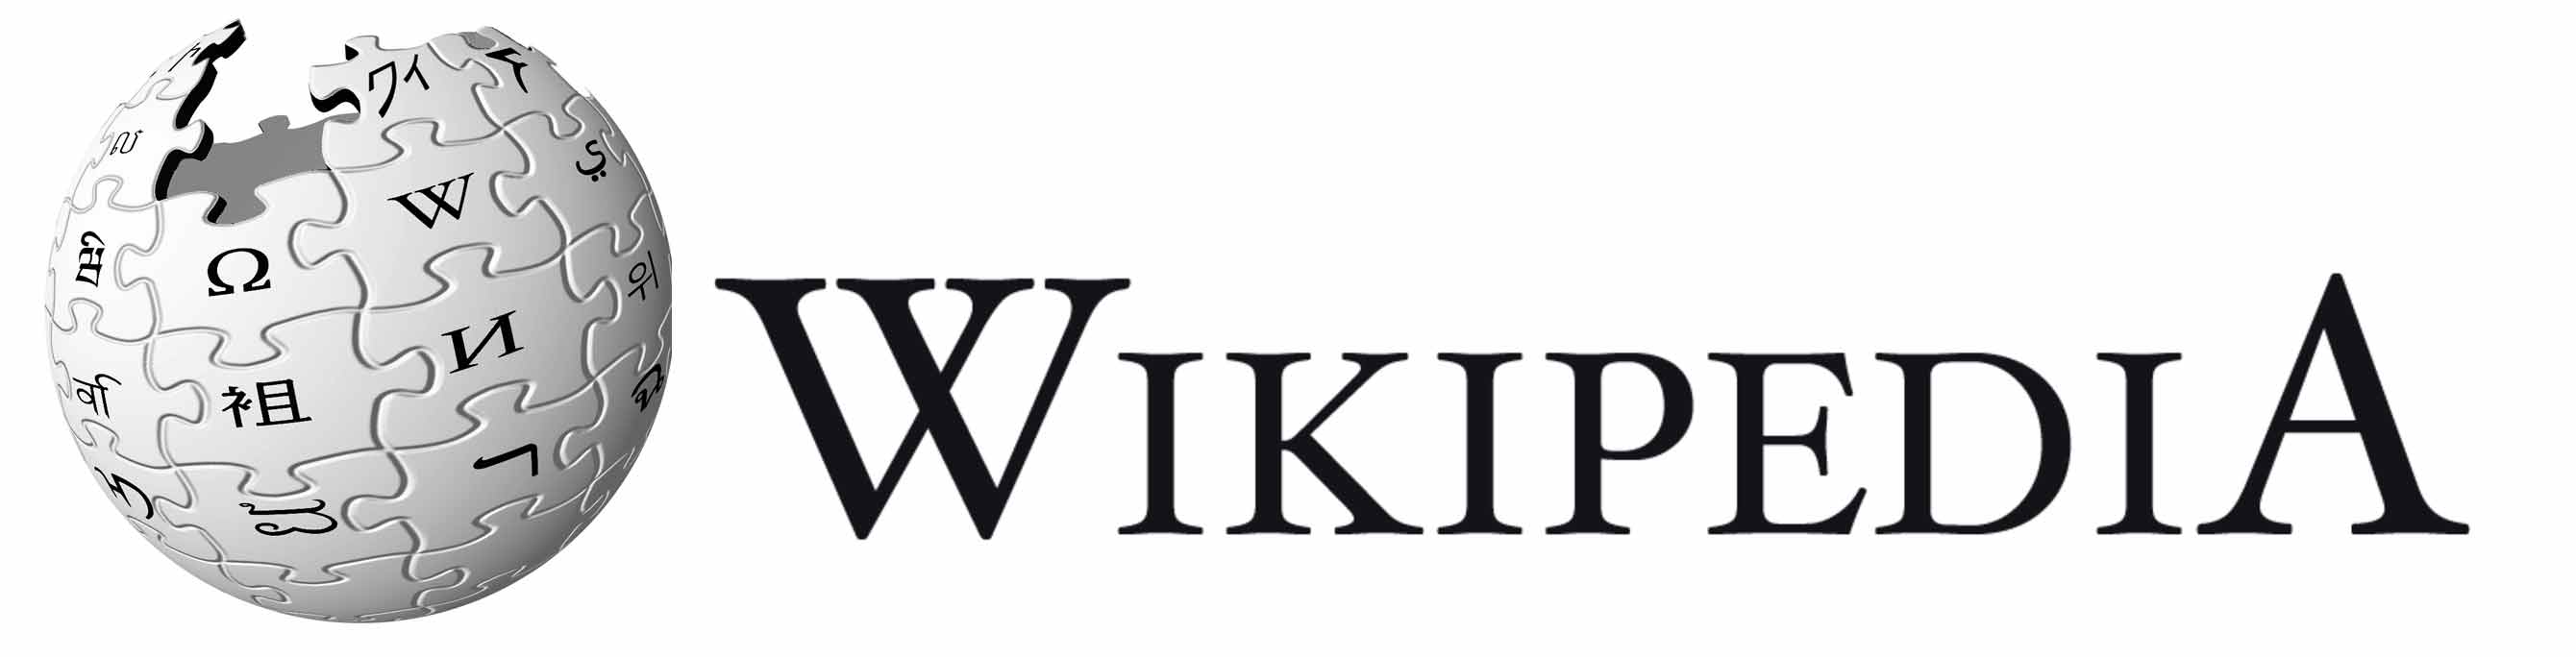 Википедия https ru wikipedia org. Википедия эмблема. Значок Википедии. Википедия логотип картинка. Википедия картинки.